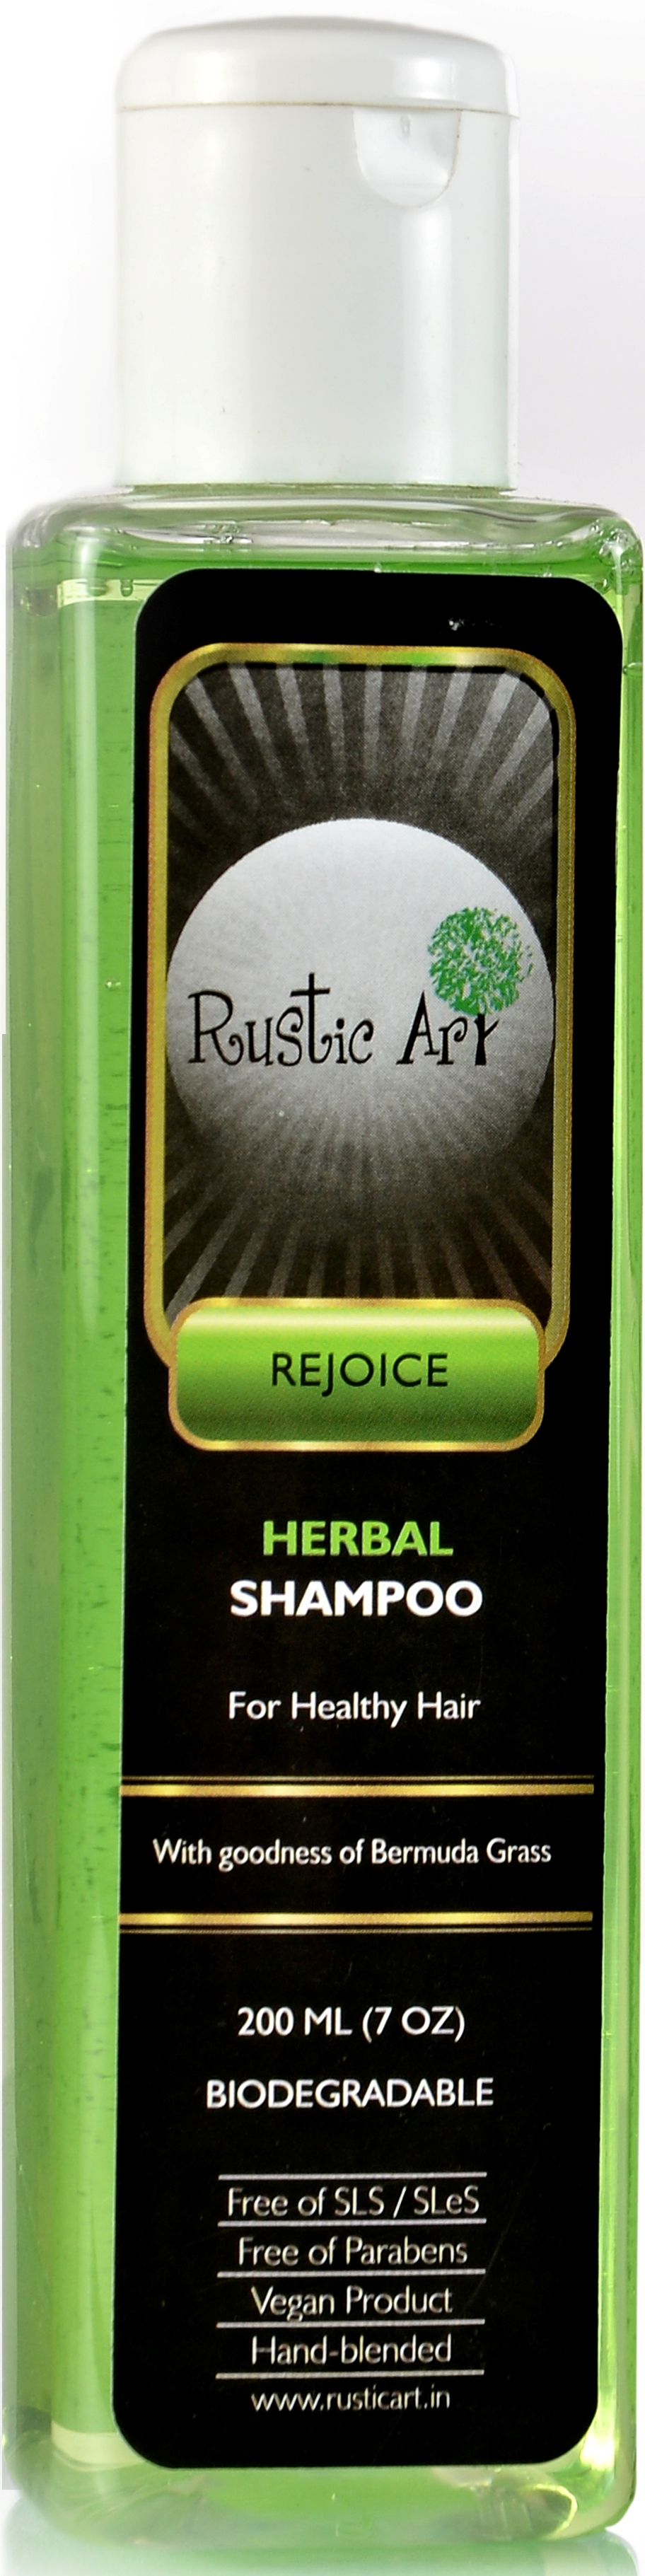 Rustic Art Biodegradable Herbal Shampoo